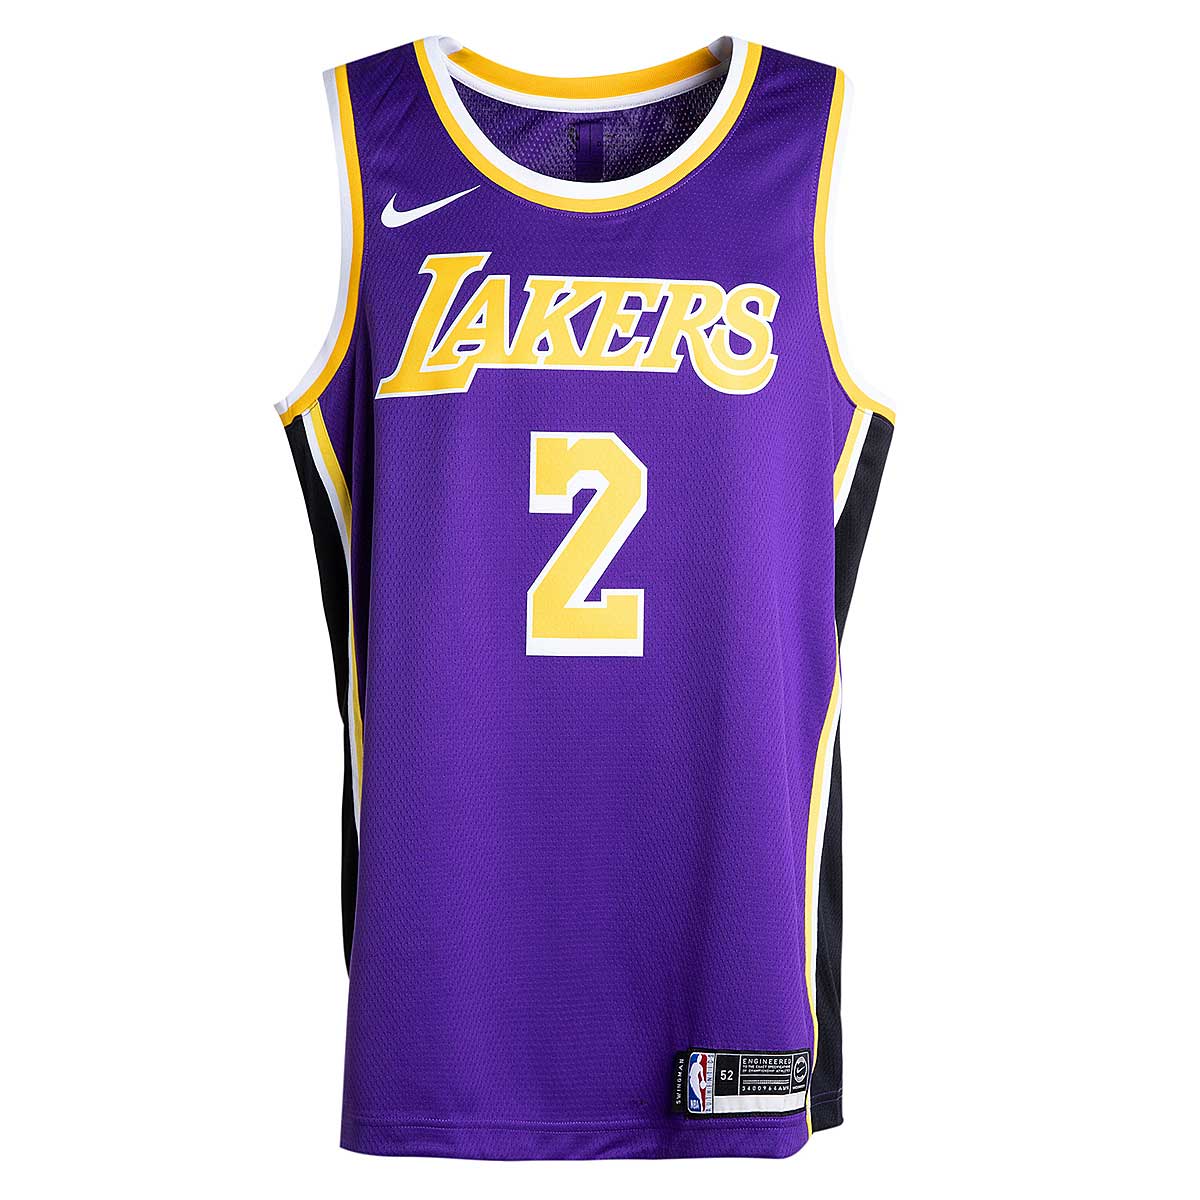 Nike Basketball LA Lakers NBA swingman vest in black